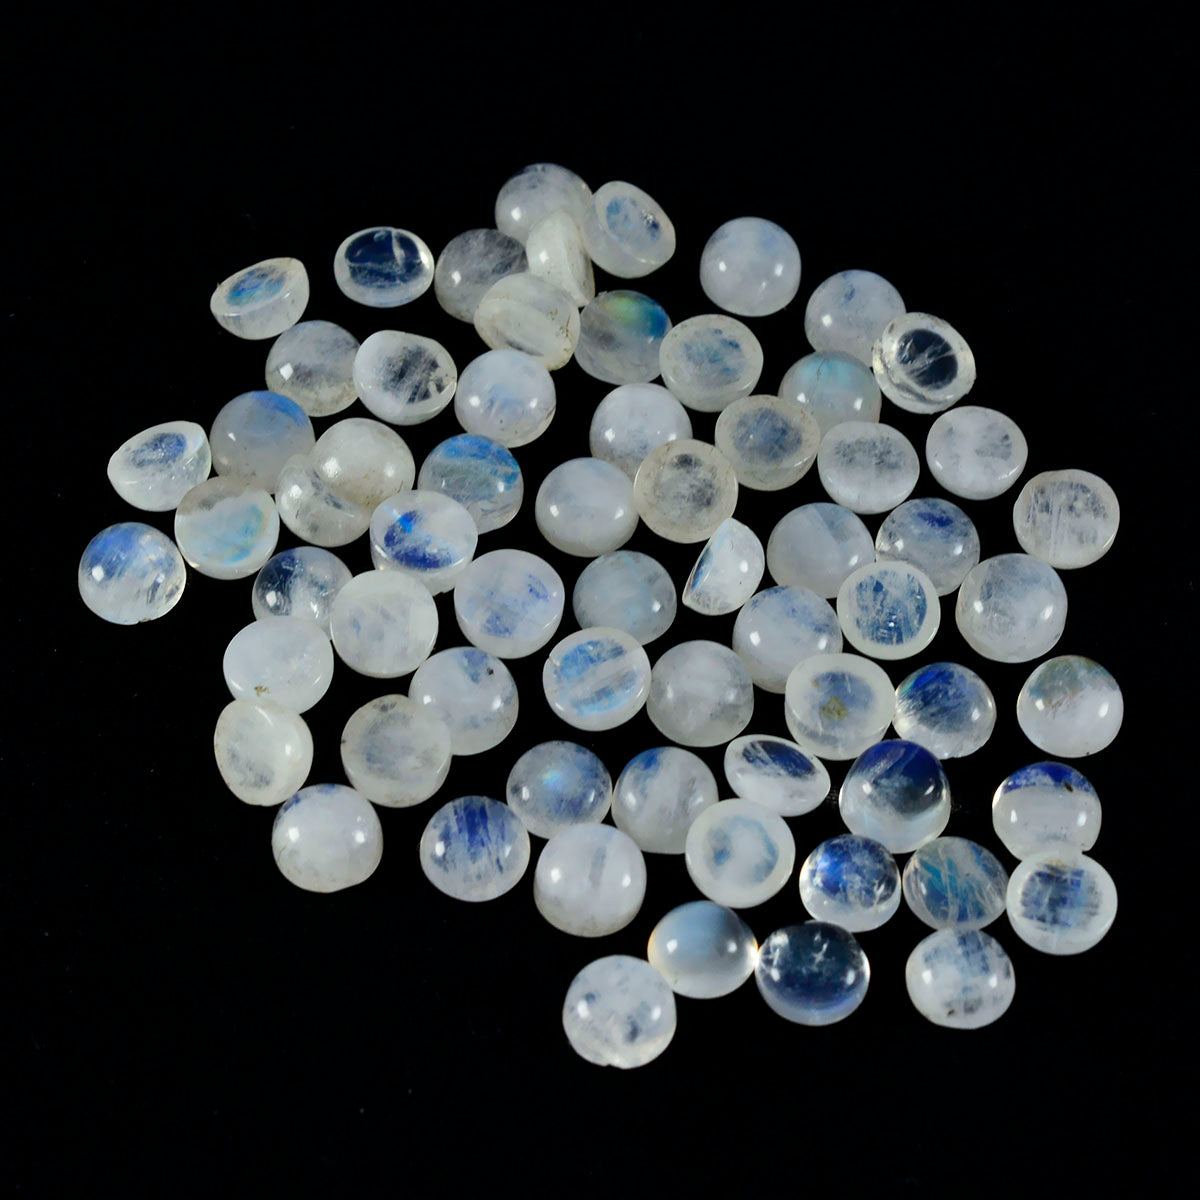 Riyogems 1PC White Rainbow Moonstone Cabochon 3x3 mm Round Shape cute Quality Loose Gems